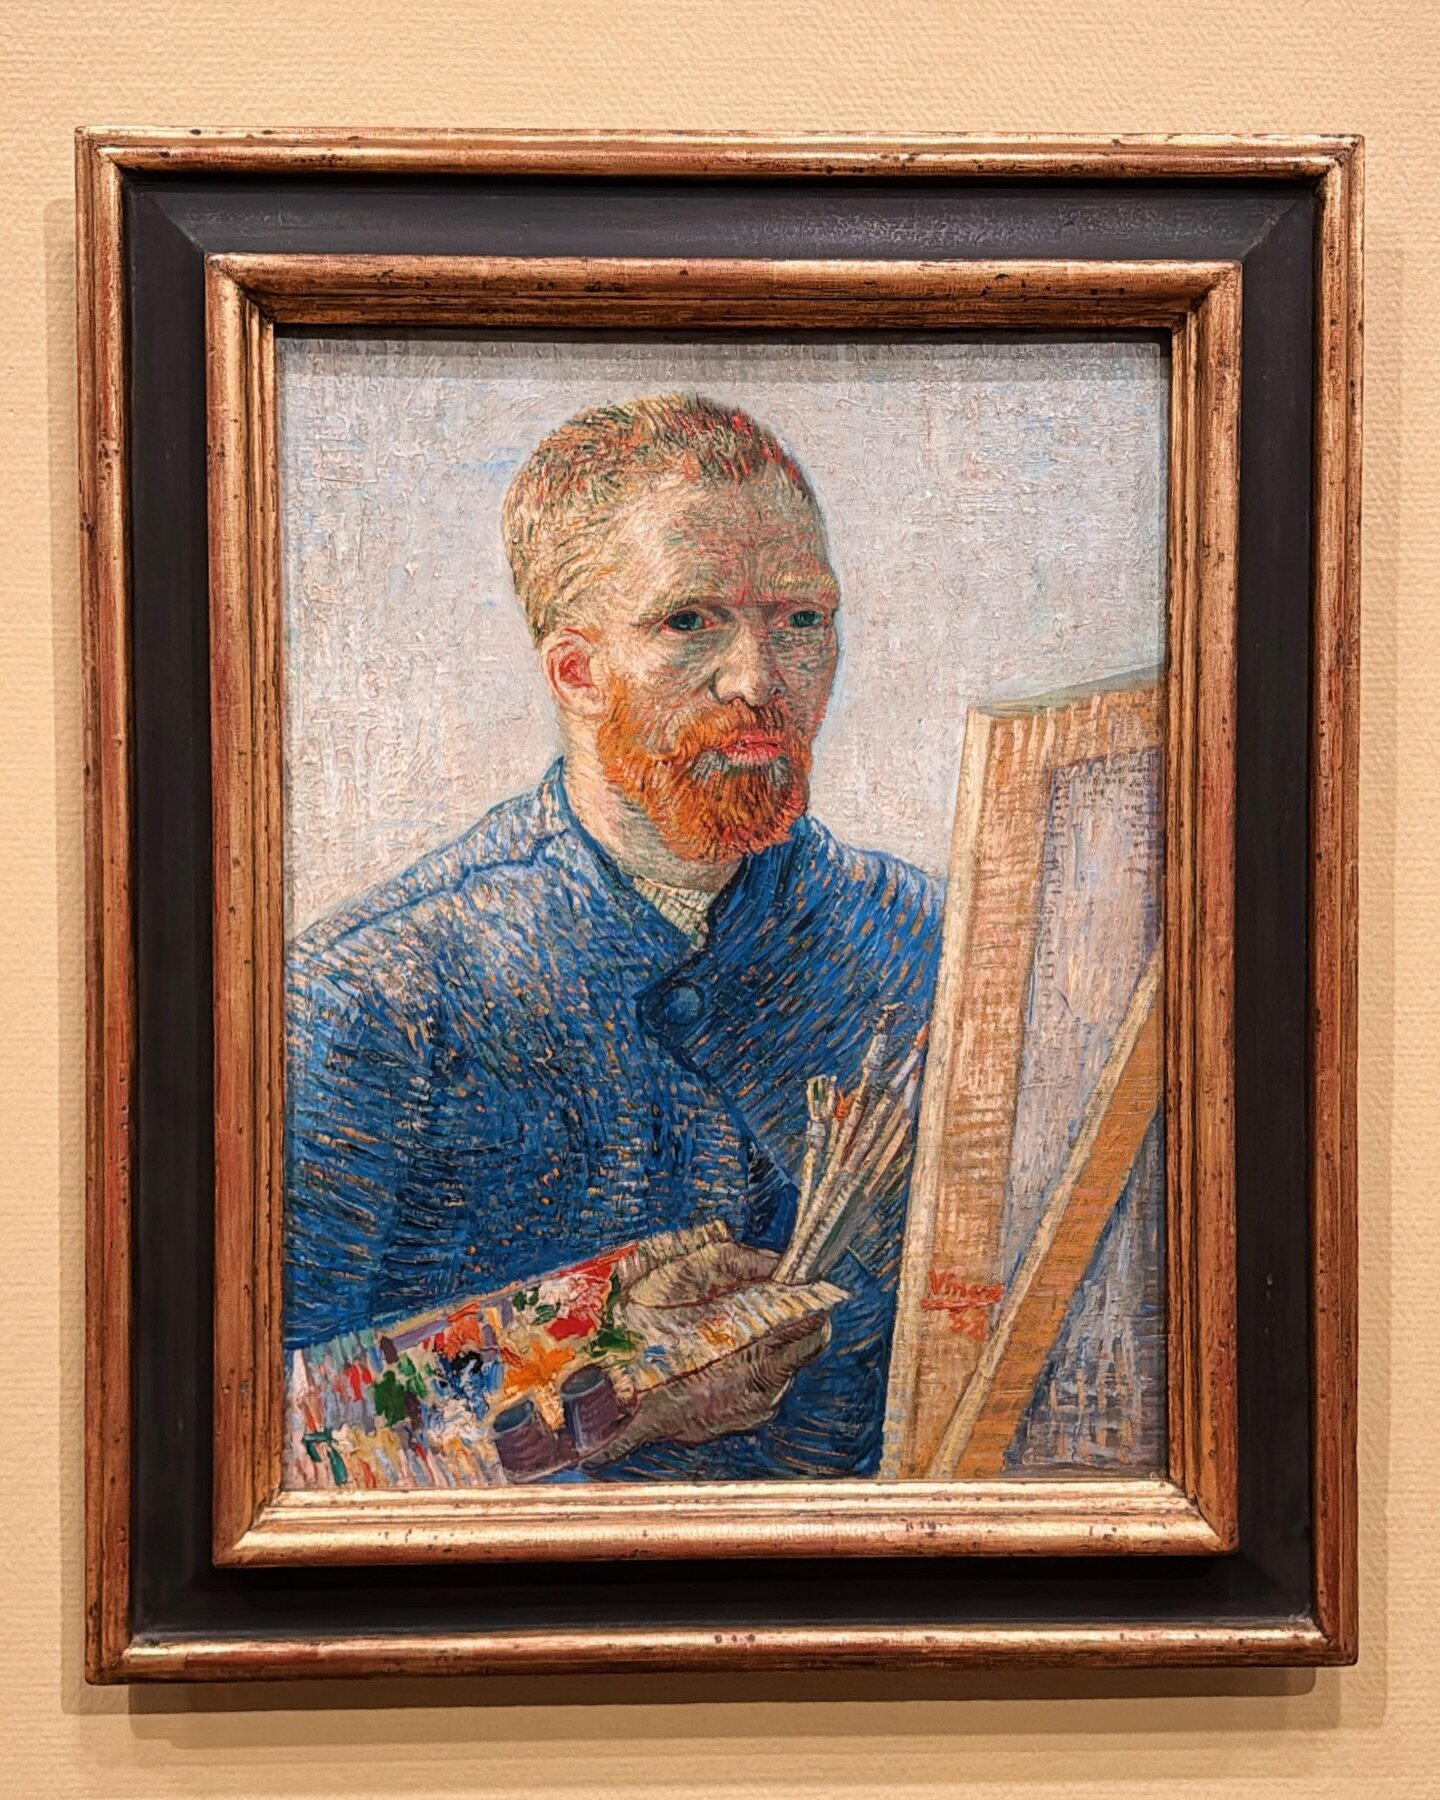 The Ear-resistable art of Vincent Van Gogh 🎨👨🏻&zwj;🎨👂🇳🇱 #vincentvangogh #vangogh #dutch #postimpressionism #legendary #oil #painter #painting #selfportrait #easel #1887 #vangogh #art #beauty #history #museum #vangoghmuseum #amsterdam #netherla